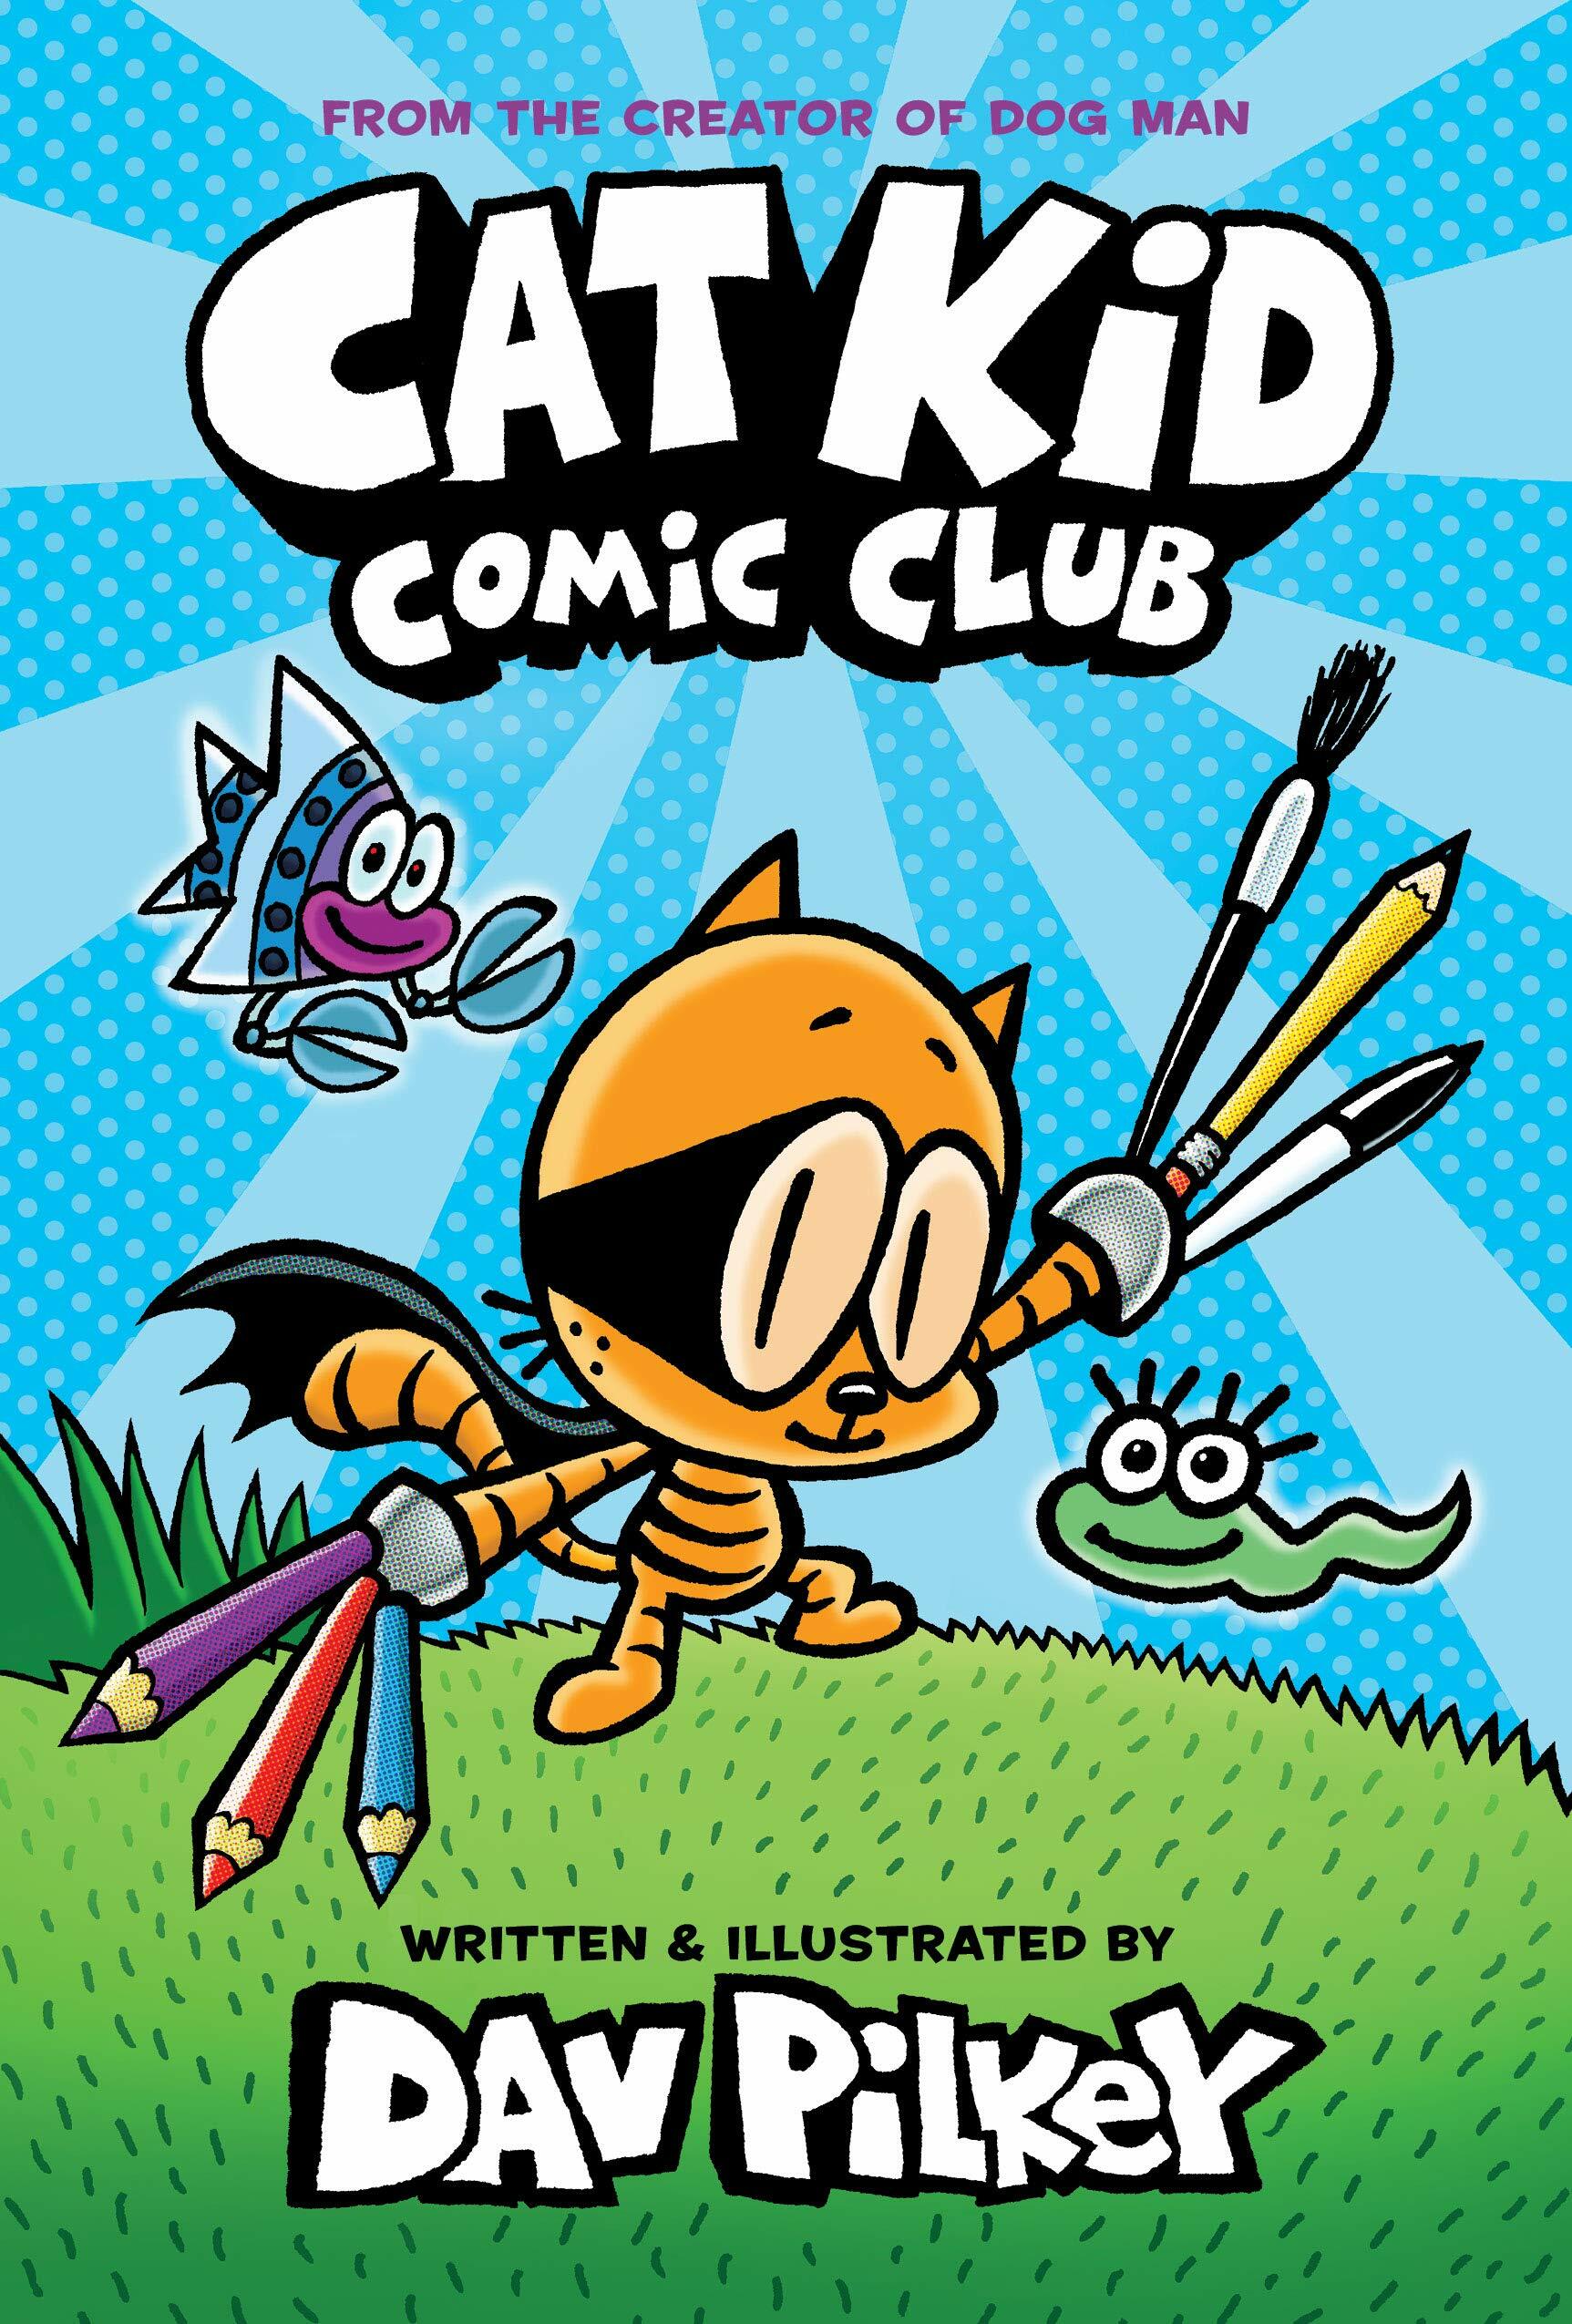 Cat kid comic club : from the creator of dog man. 1